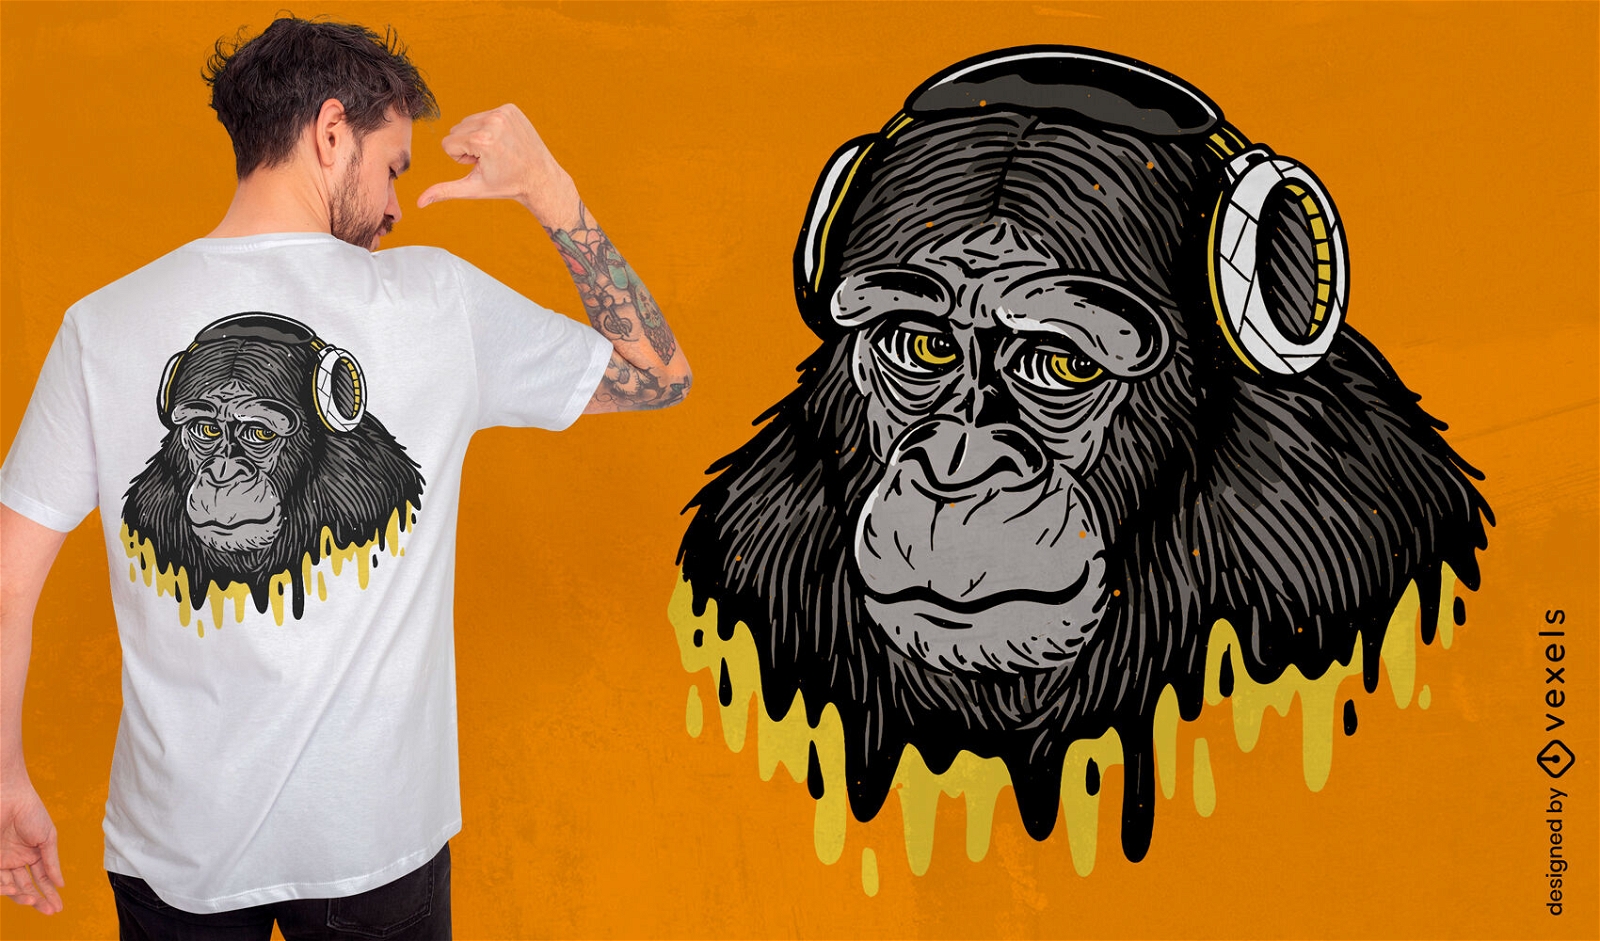 Monkey animal with headphones t-shirt design